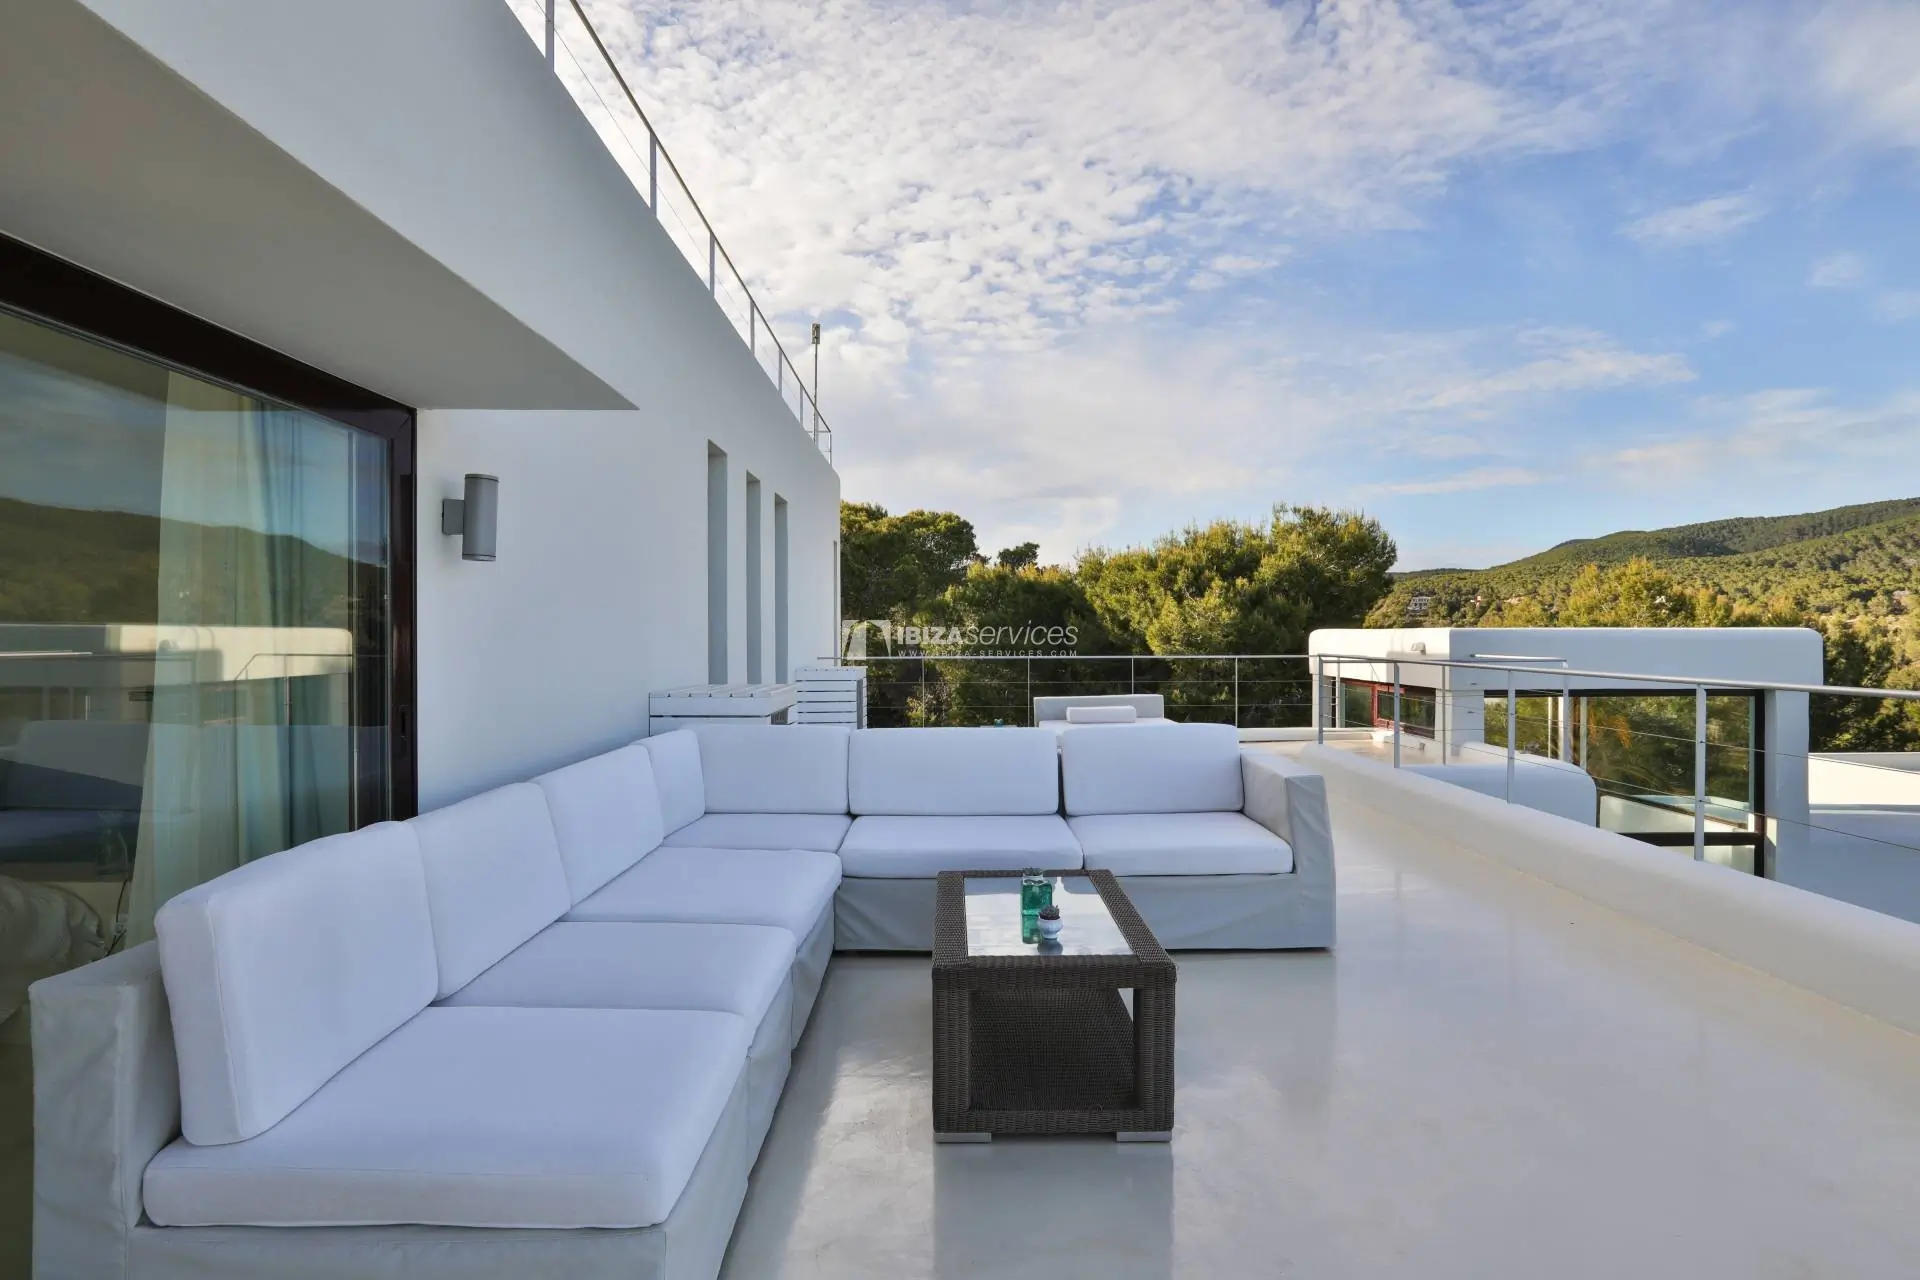 Luxury 6 bedroom holiday villa Cala Jondal close to Blue Marlin - Ibiza ...